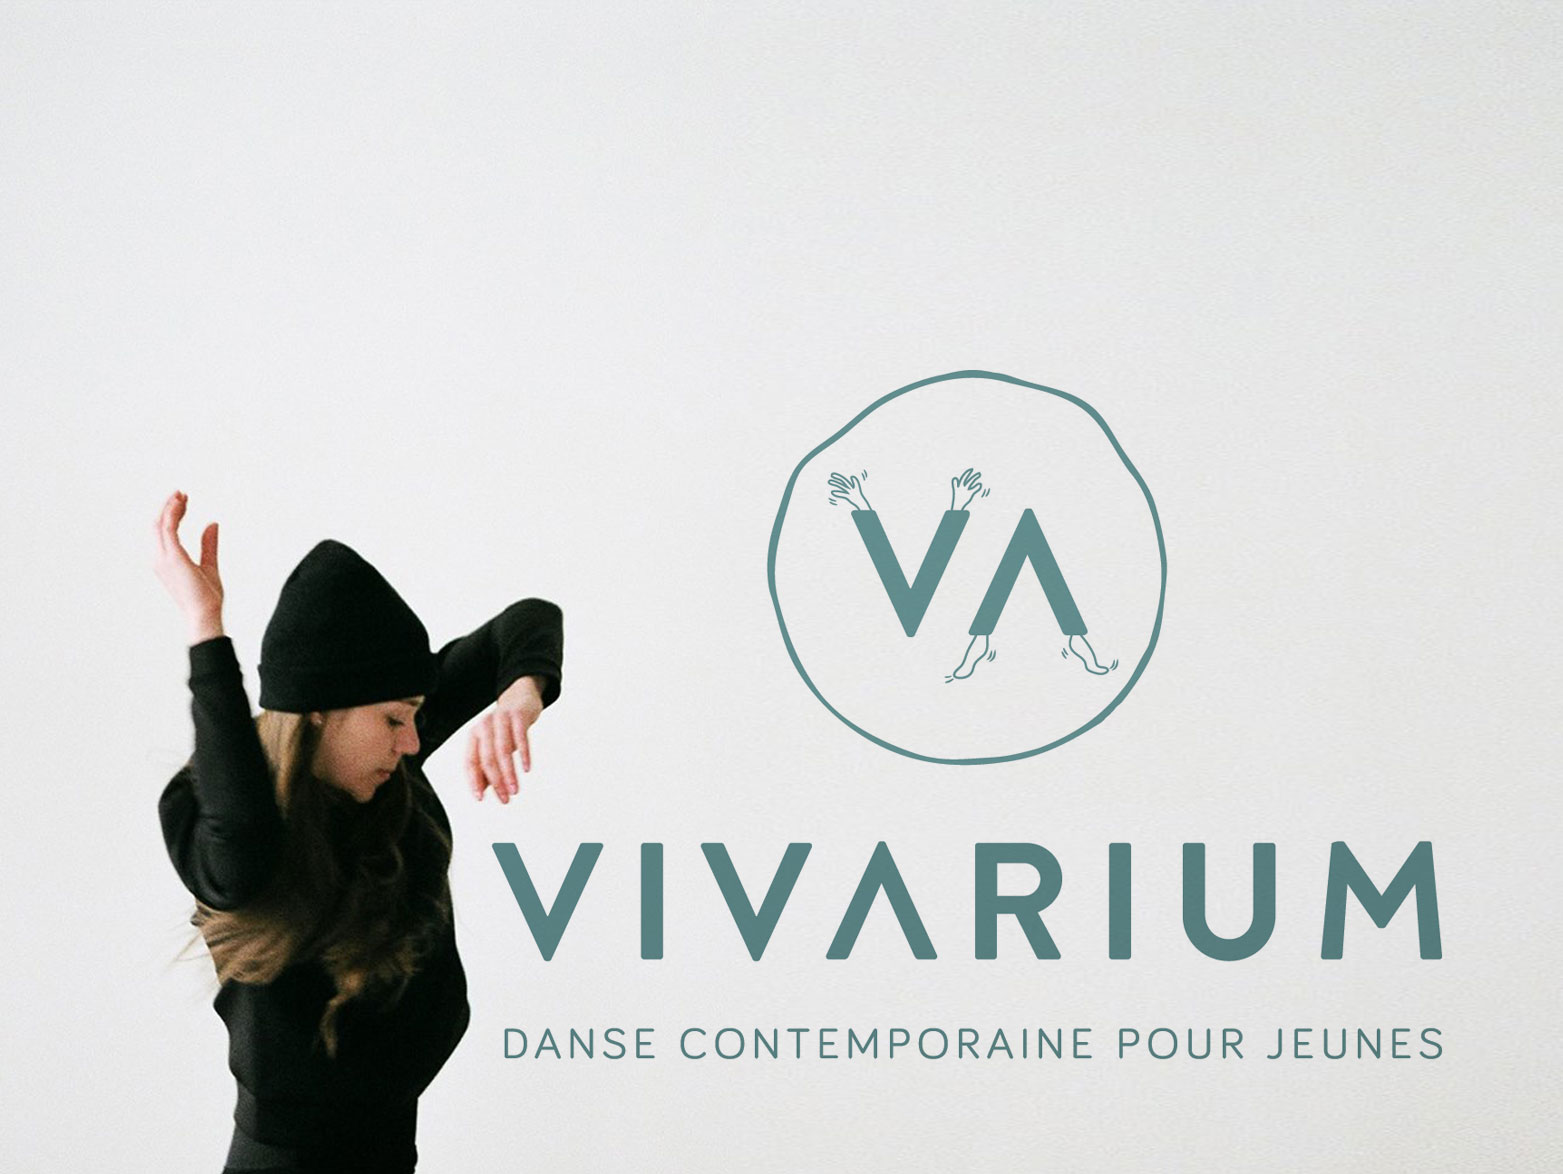 Vivarium dance